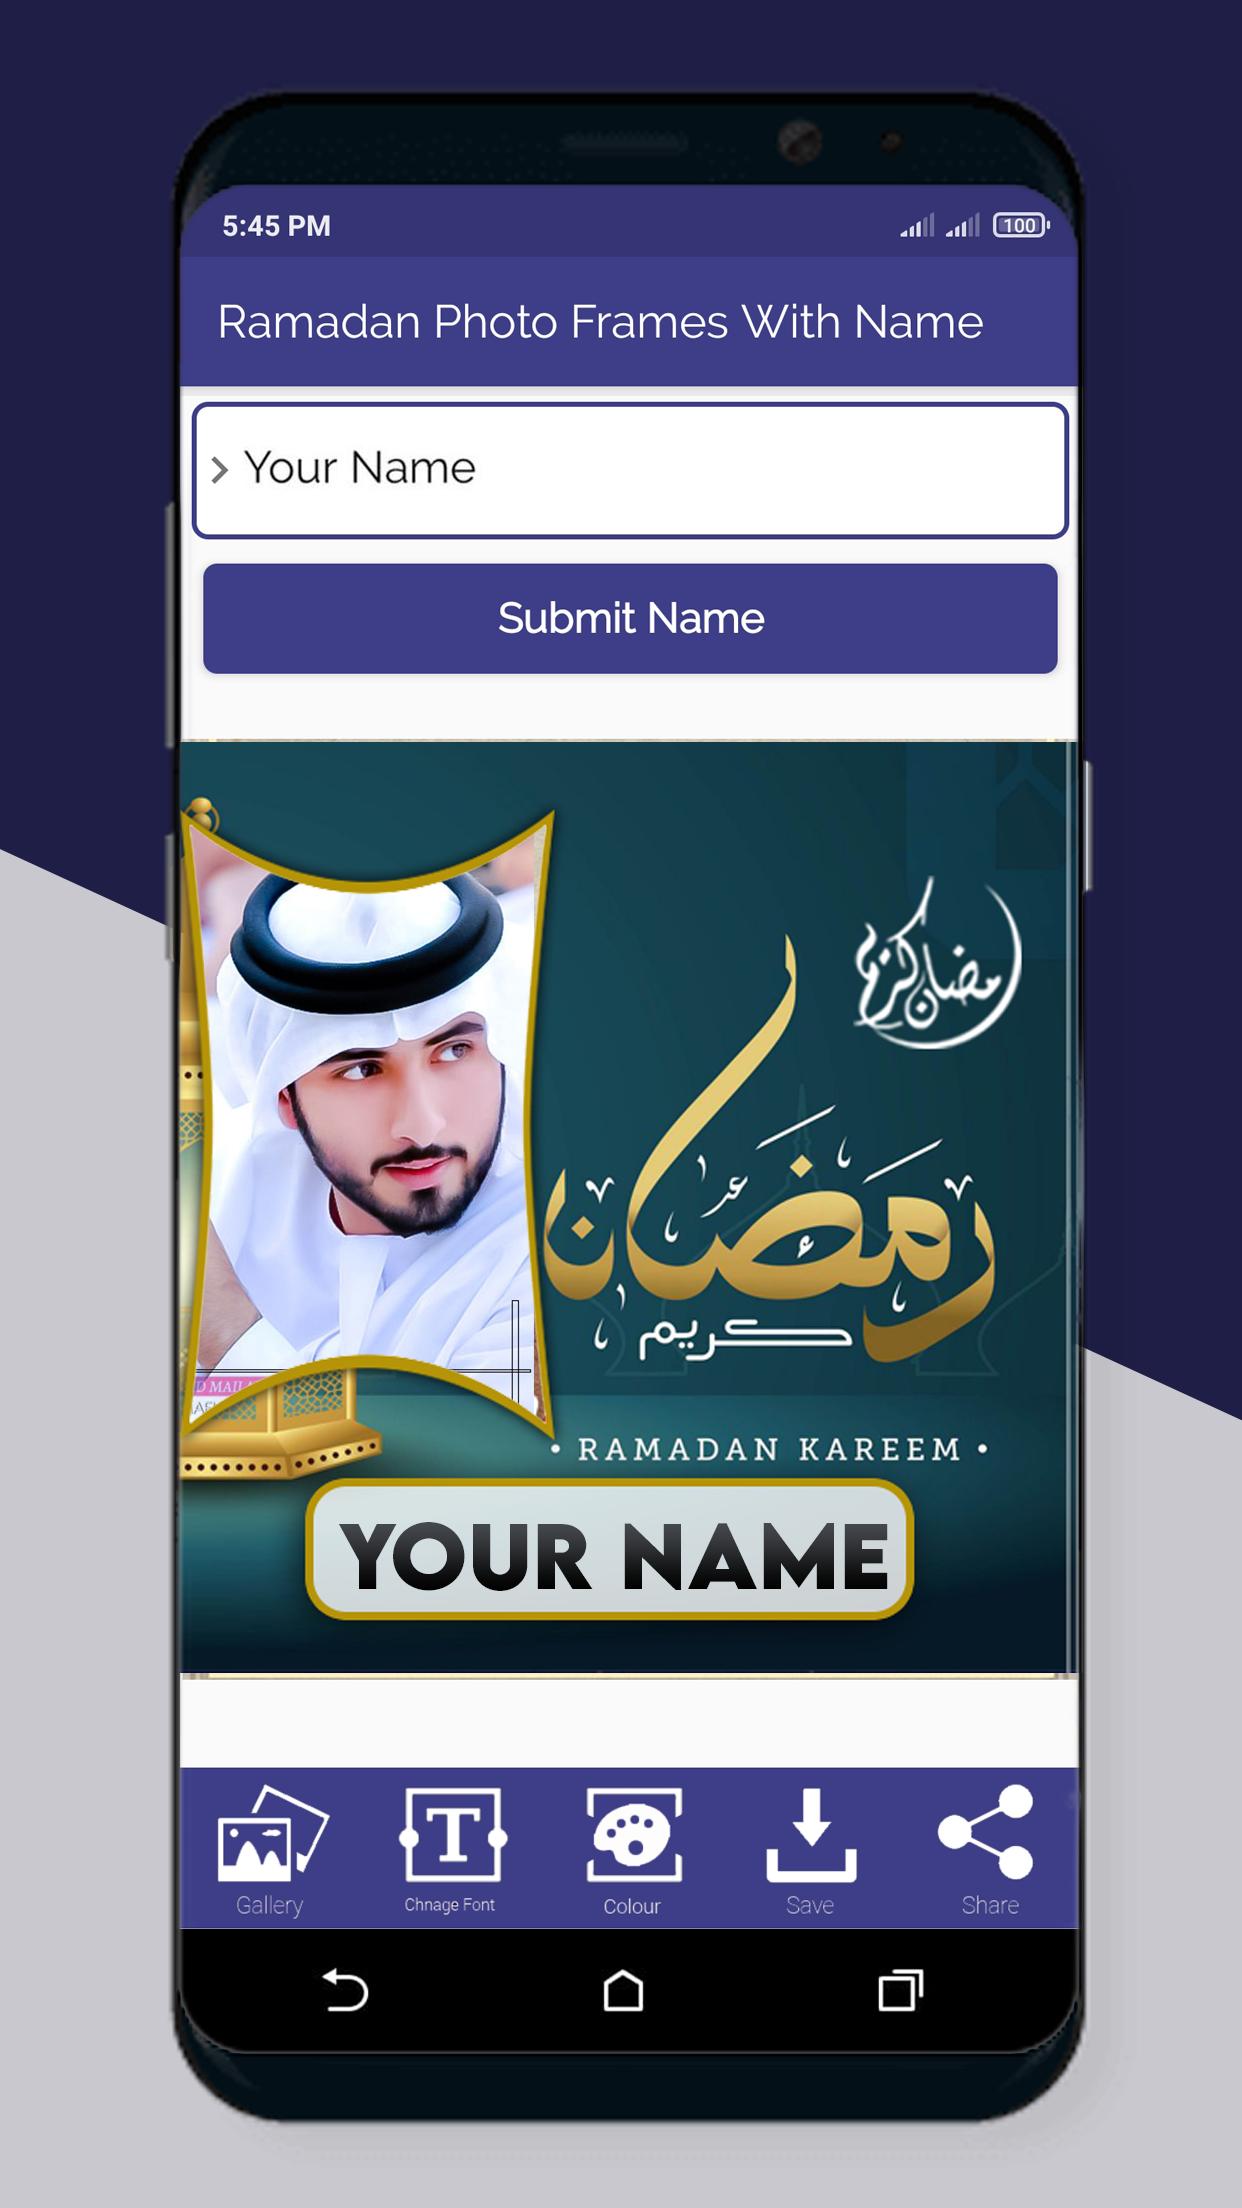 Ramadan 2021 Photo Frames With Name 3.0 Screenshot 6